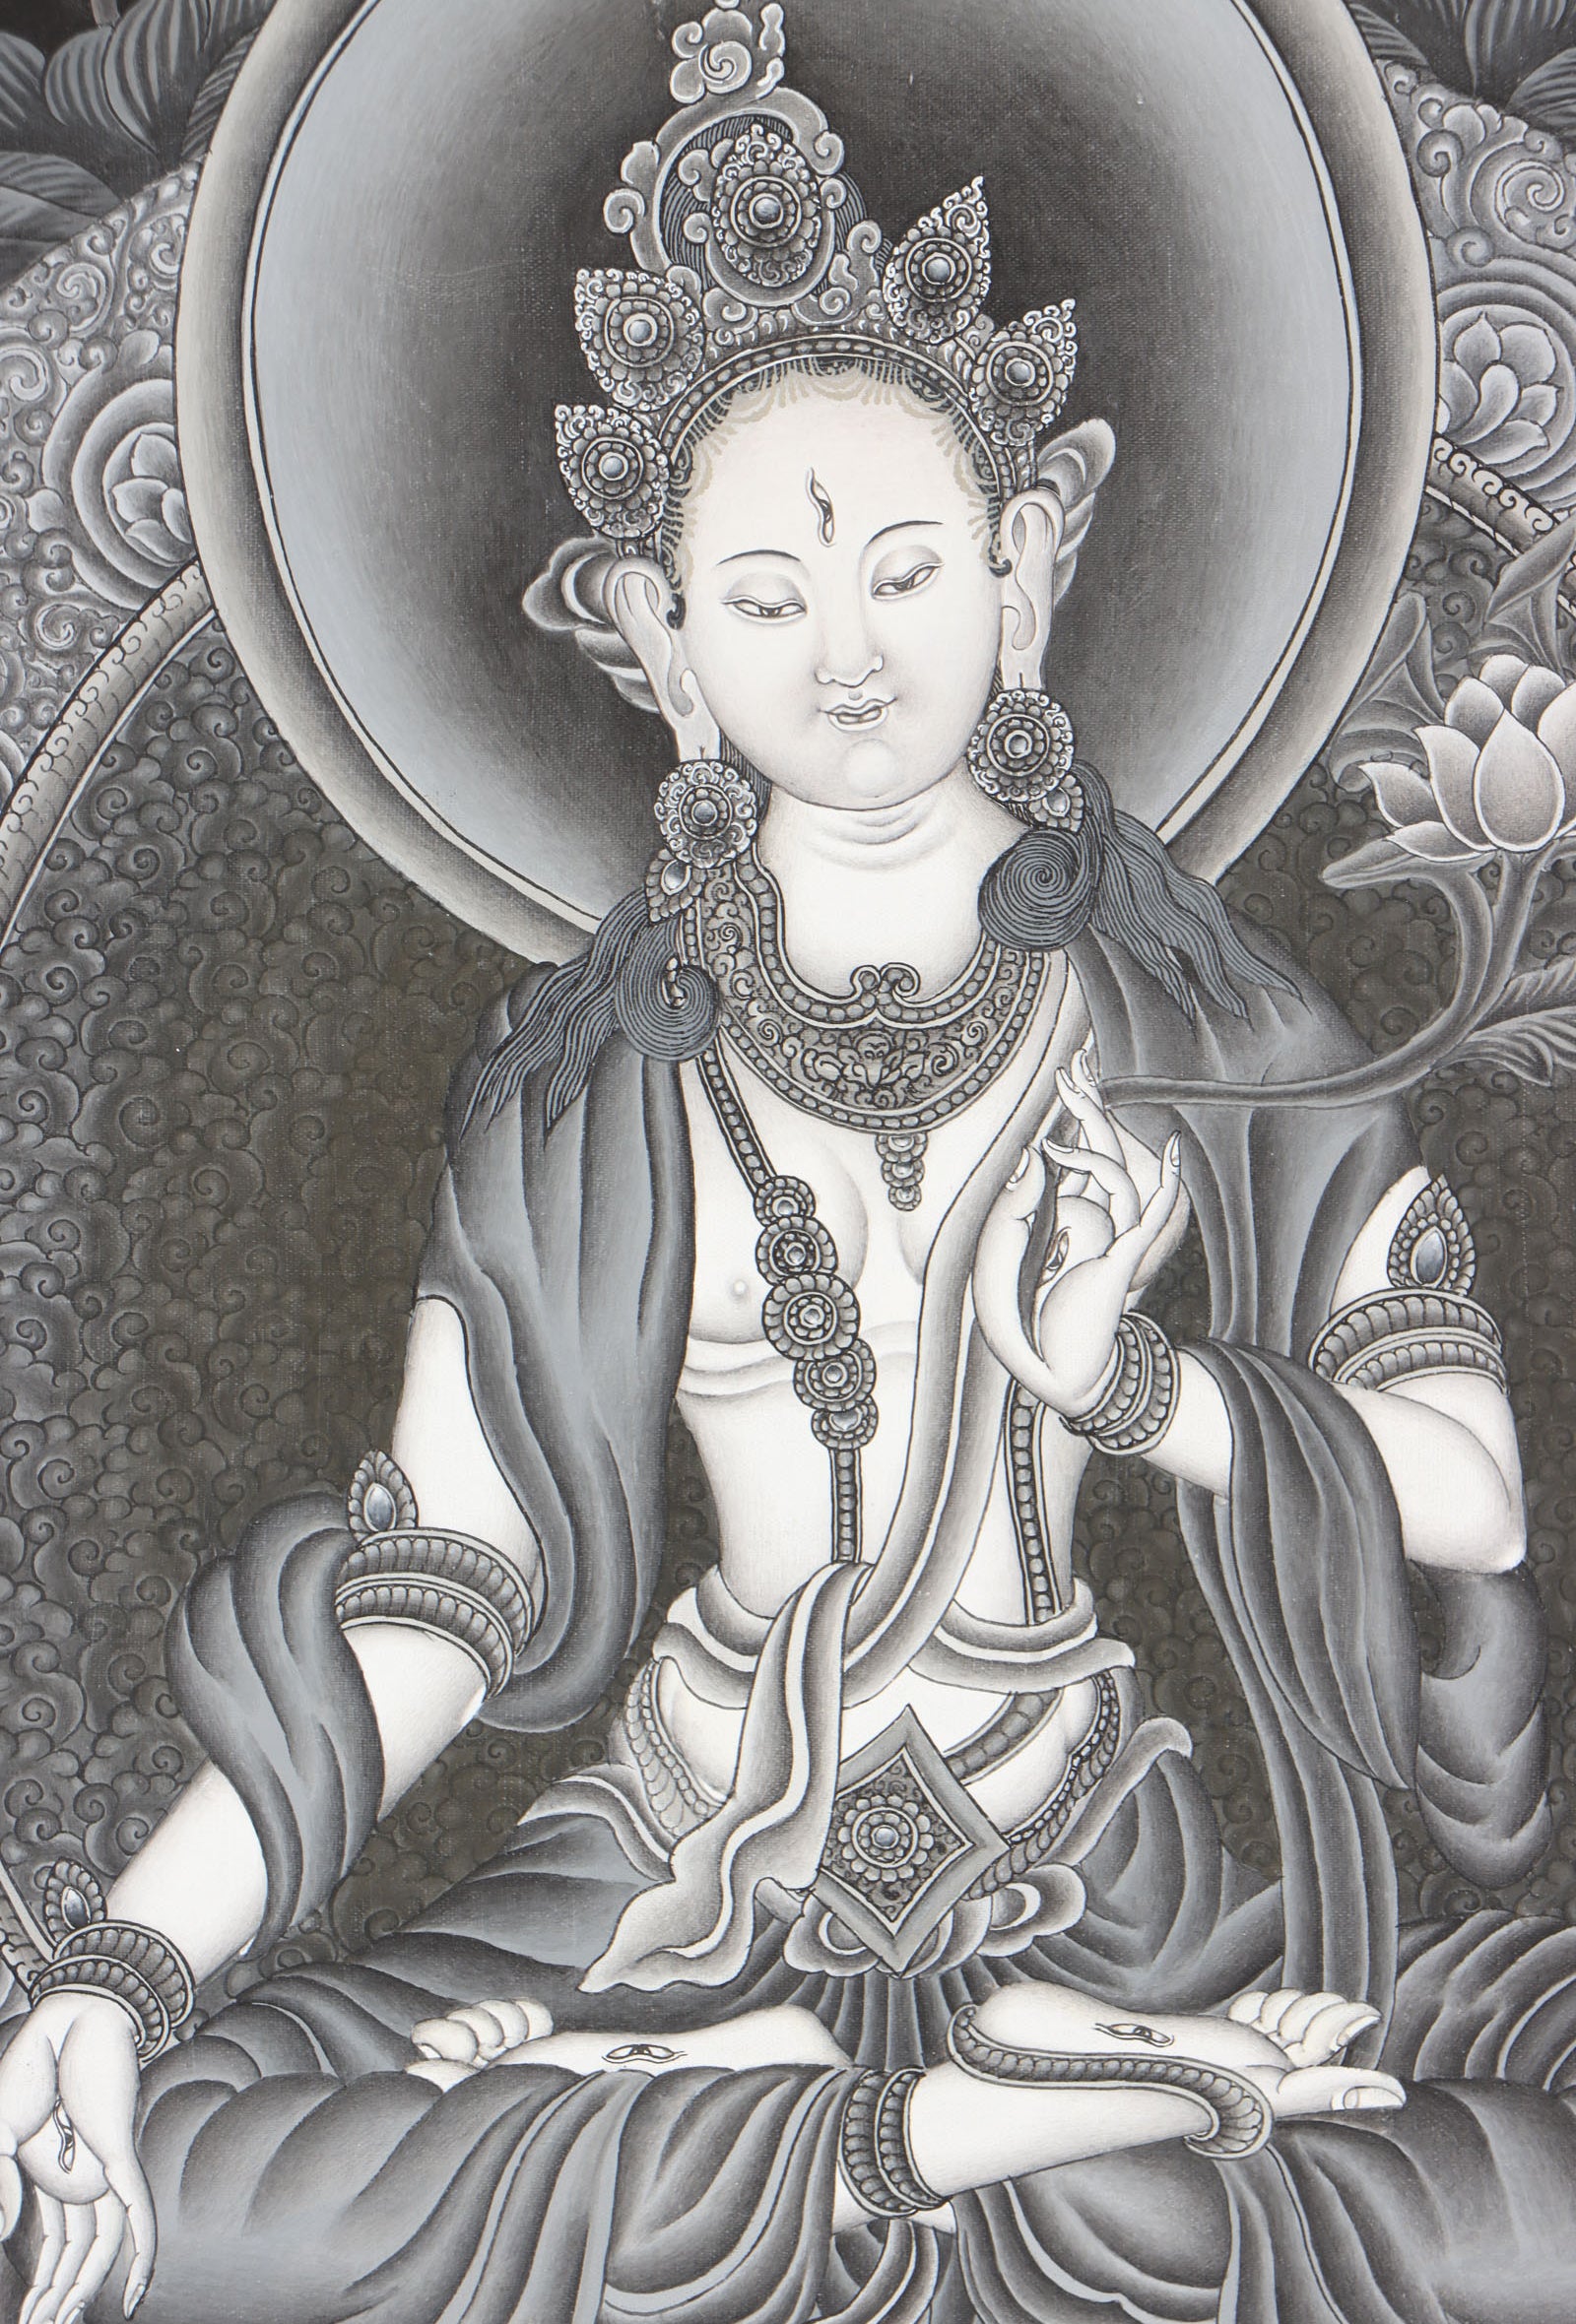 Newari White Tara Thangka Painting for wall decor.